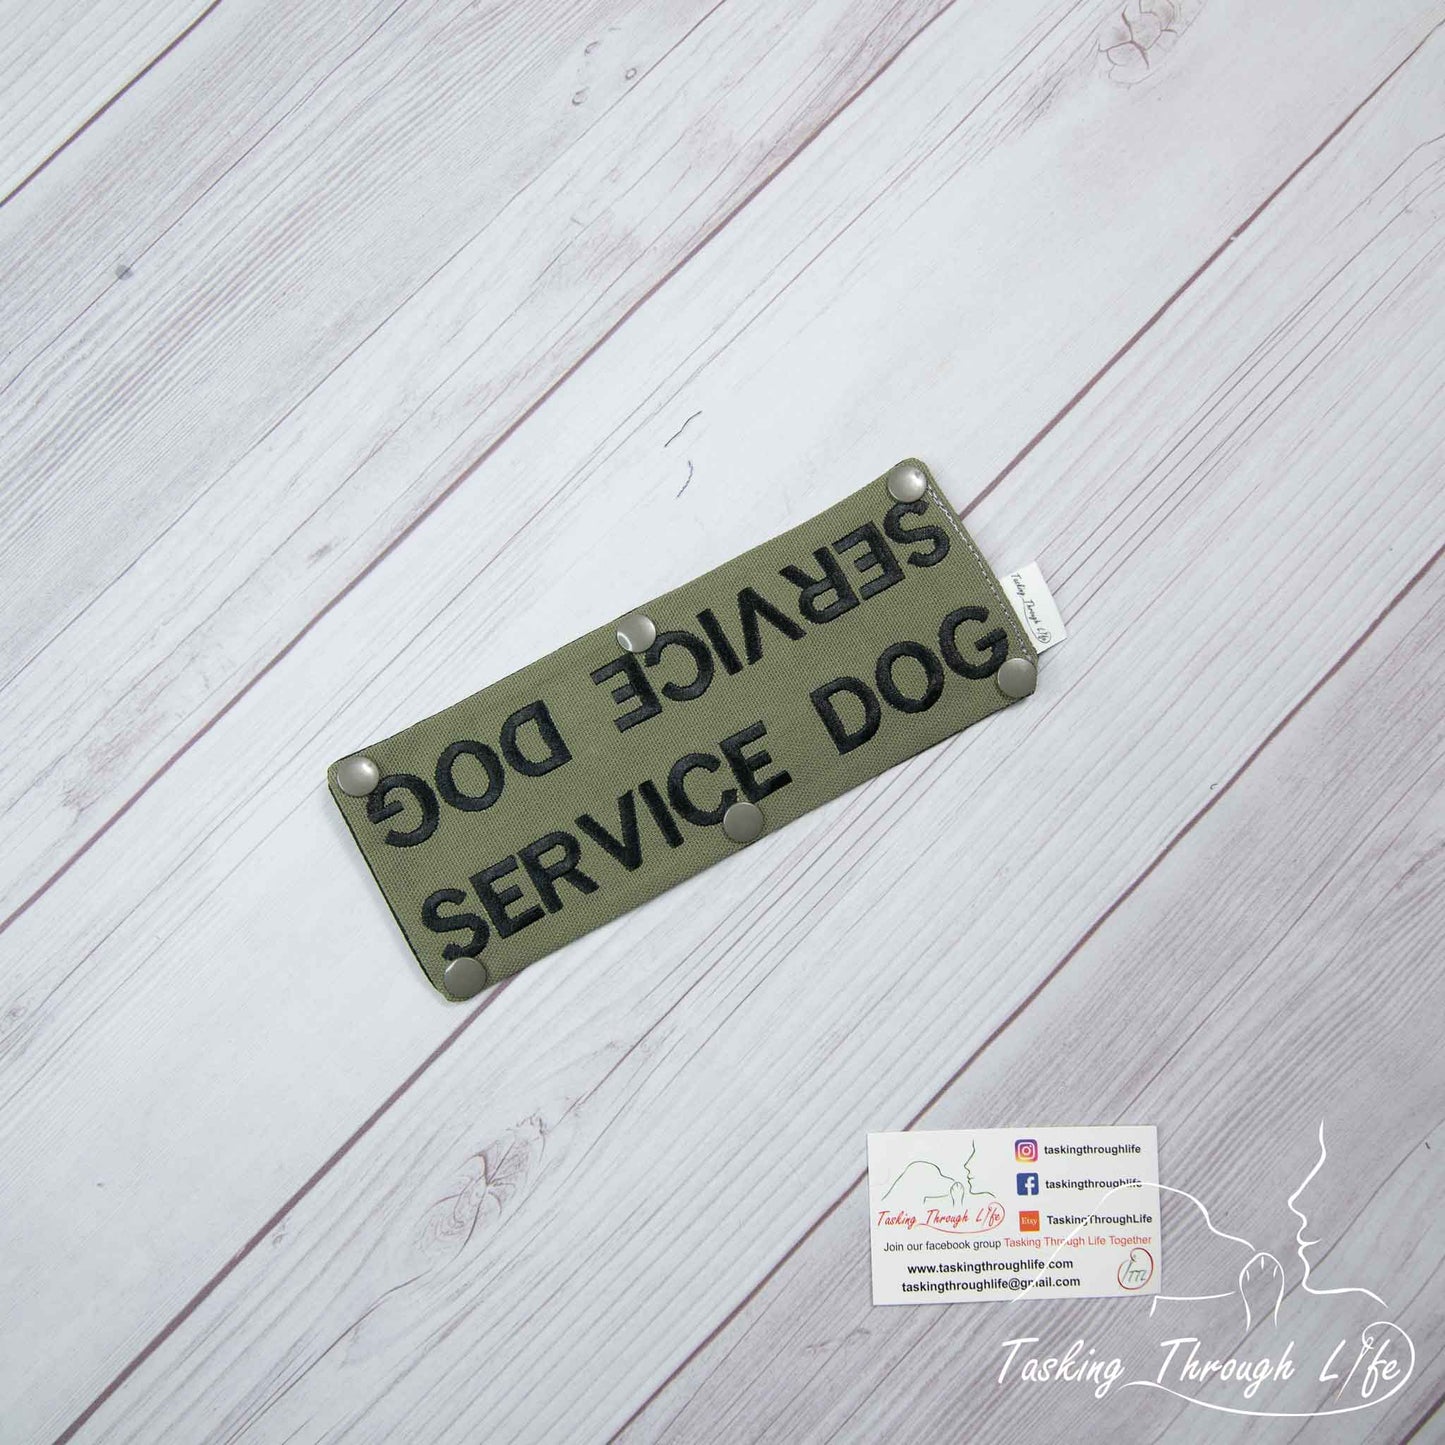 Service Dog Leash Wrap - S10